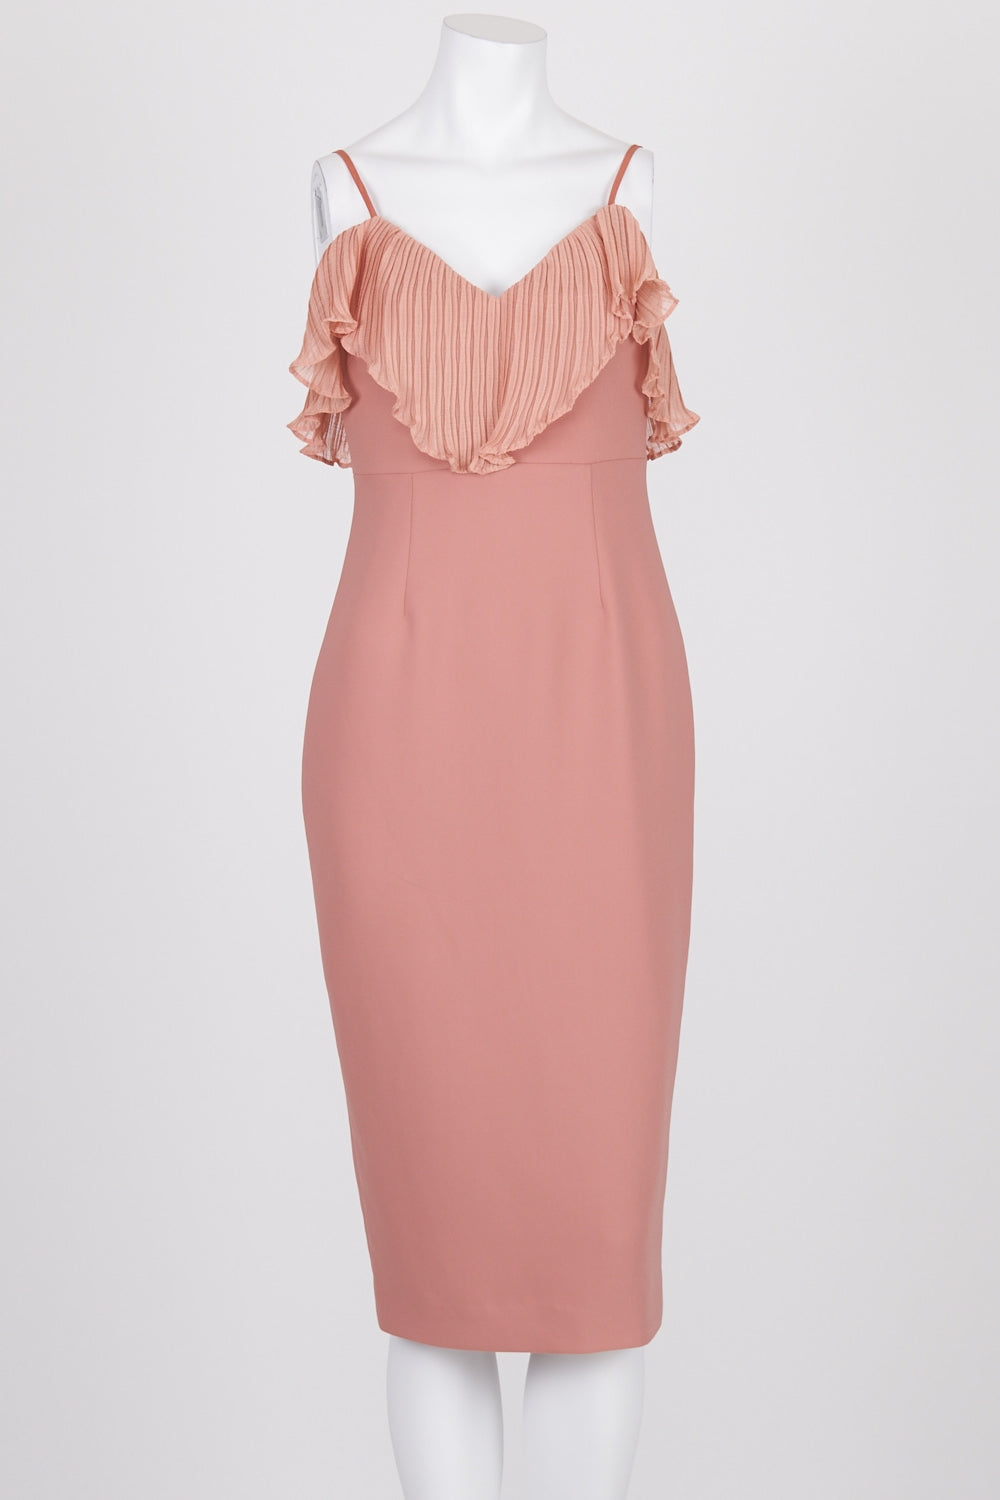 Talulah Pink Midi Dress S